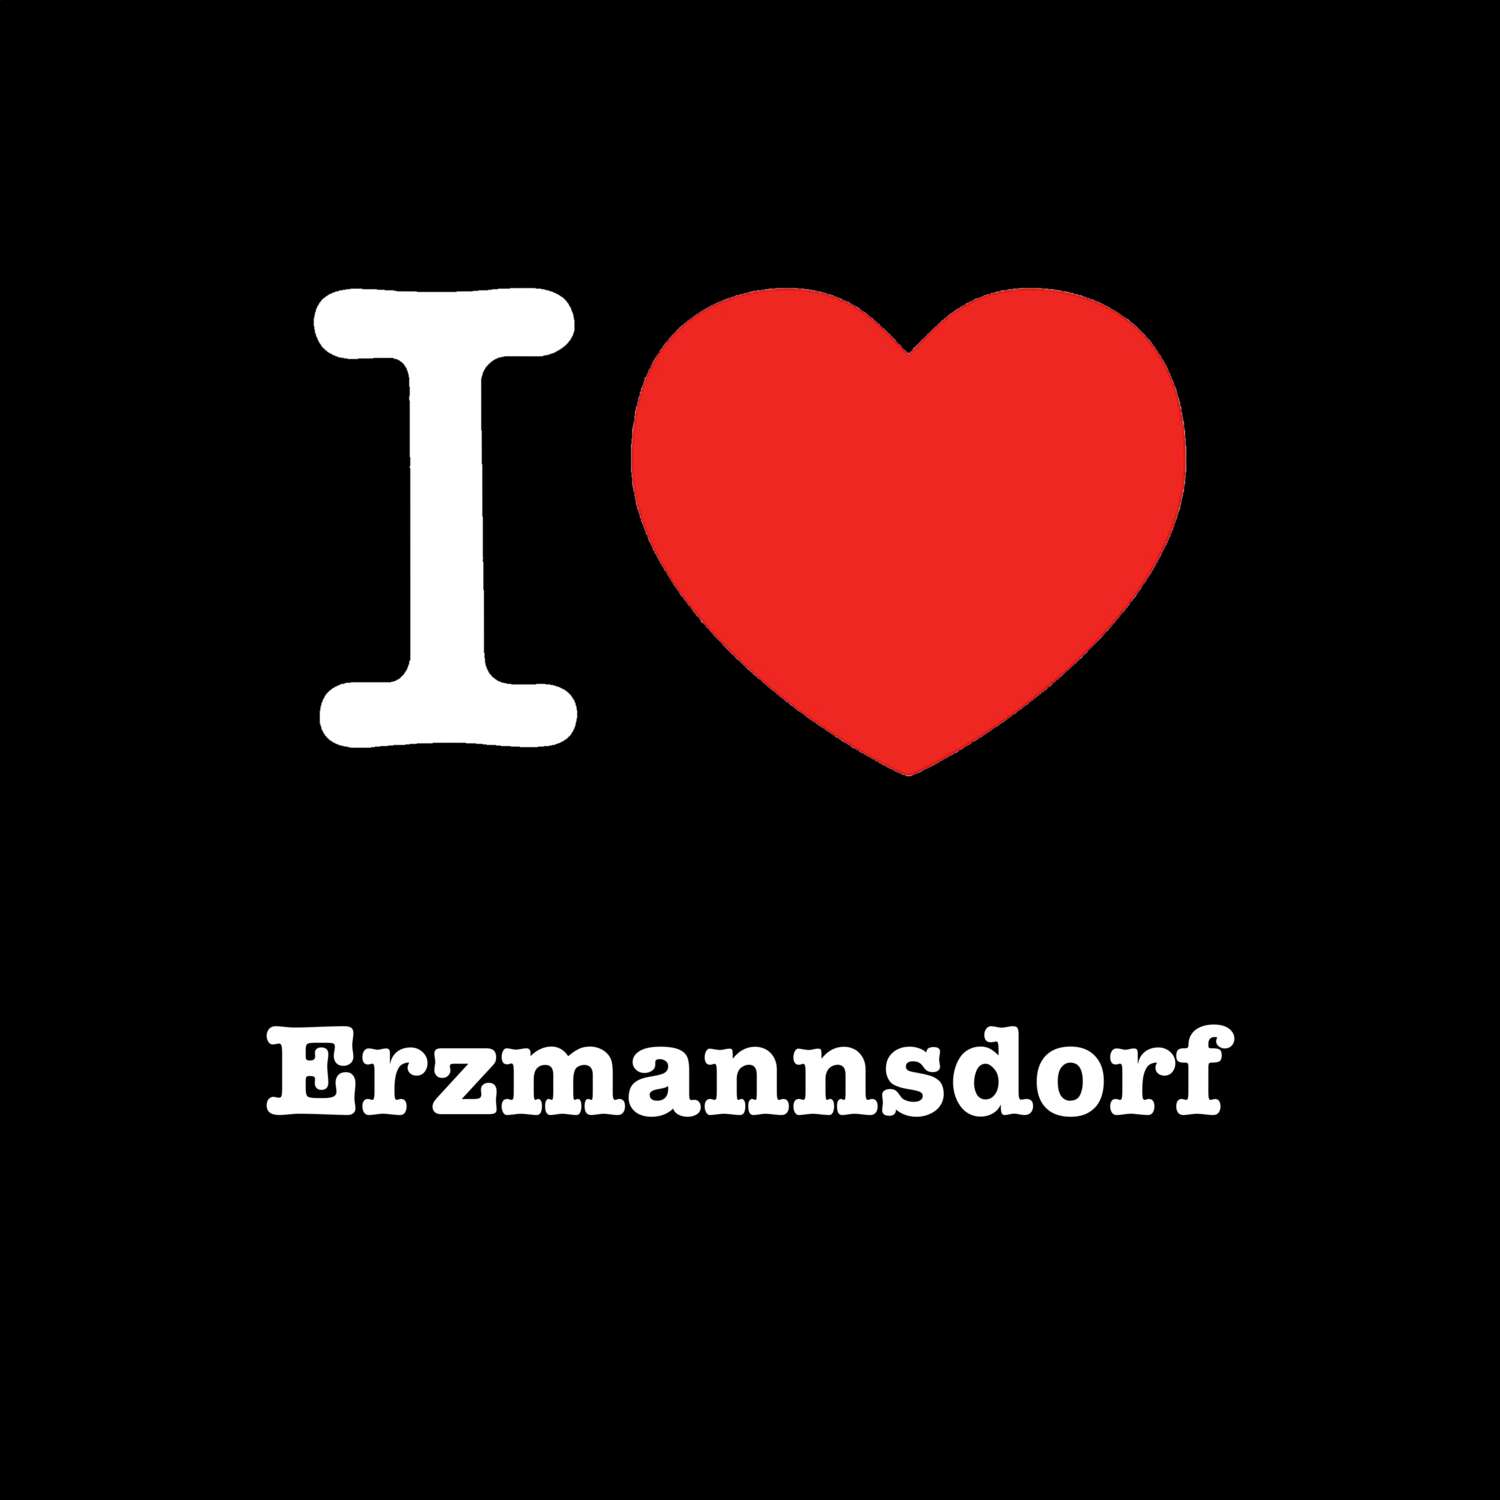 Erzmannsdorf T-Shirt »I love«